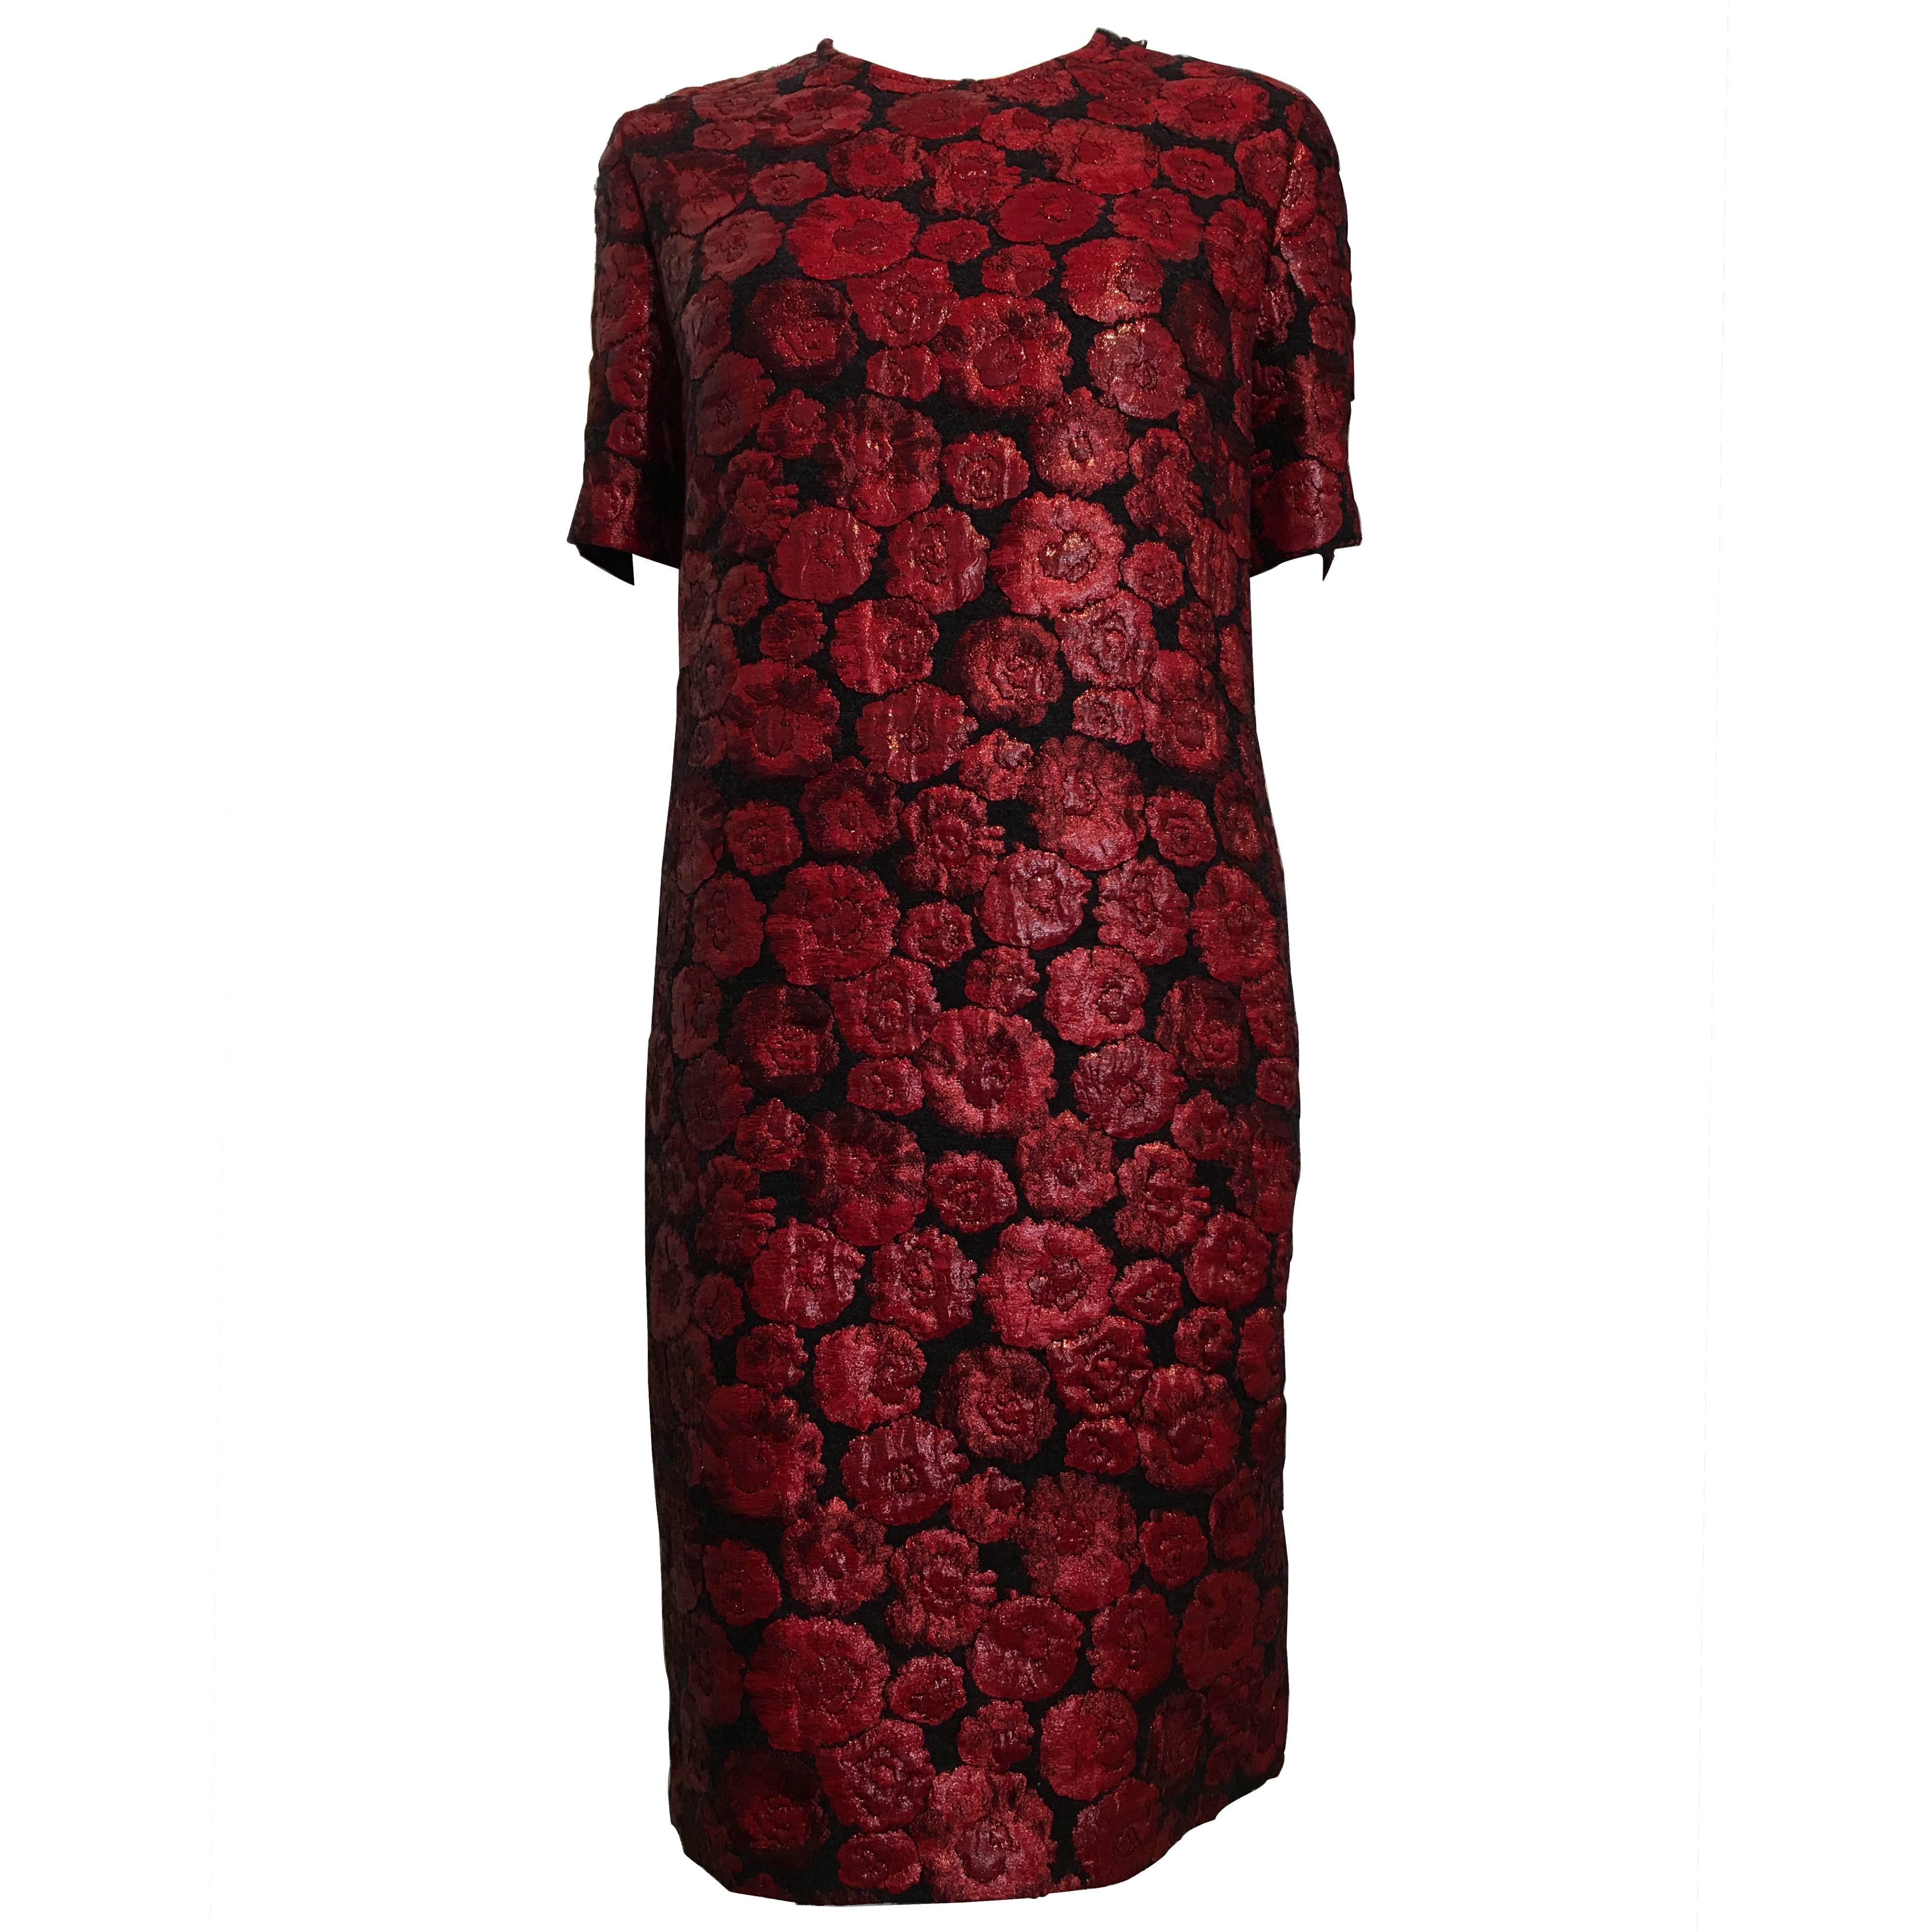 Lanvin Red Floral Dress size 44 (12)